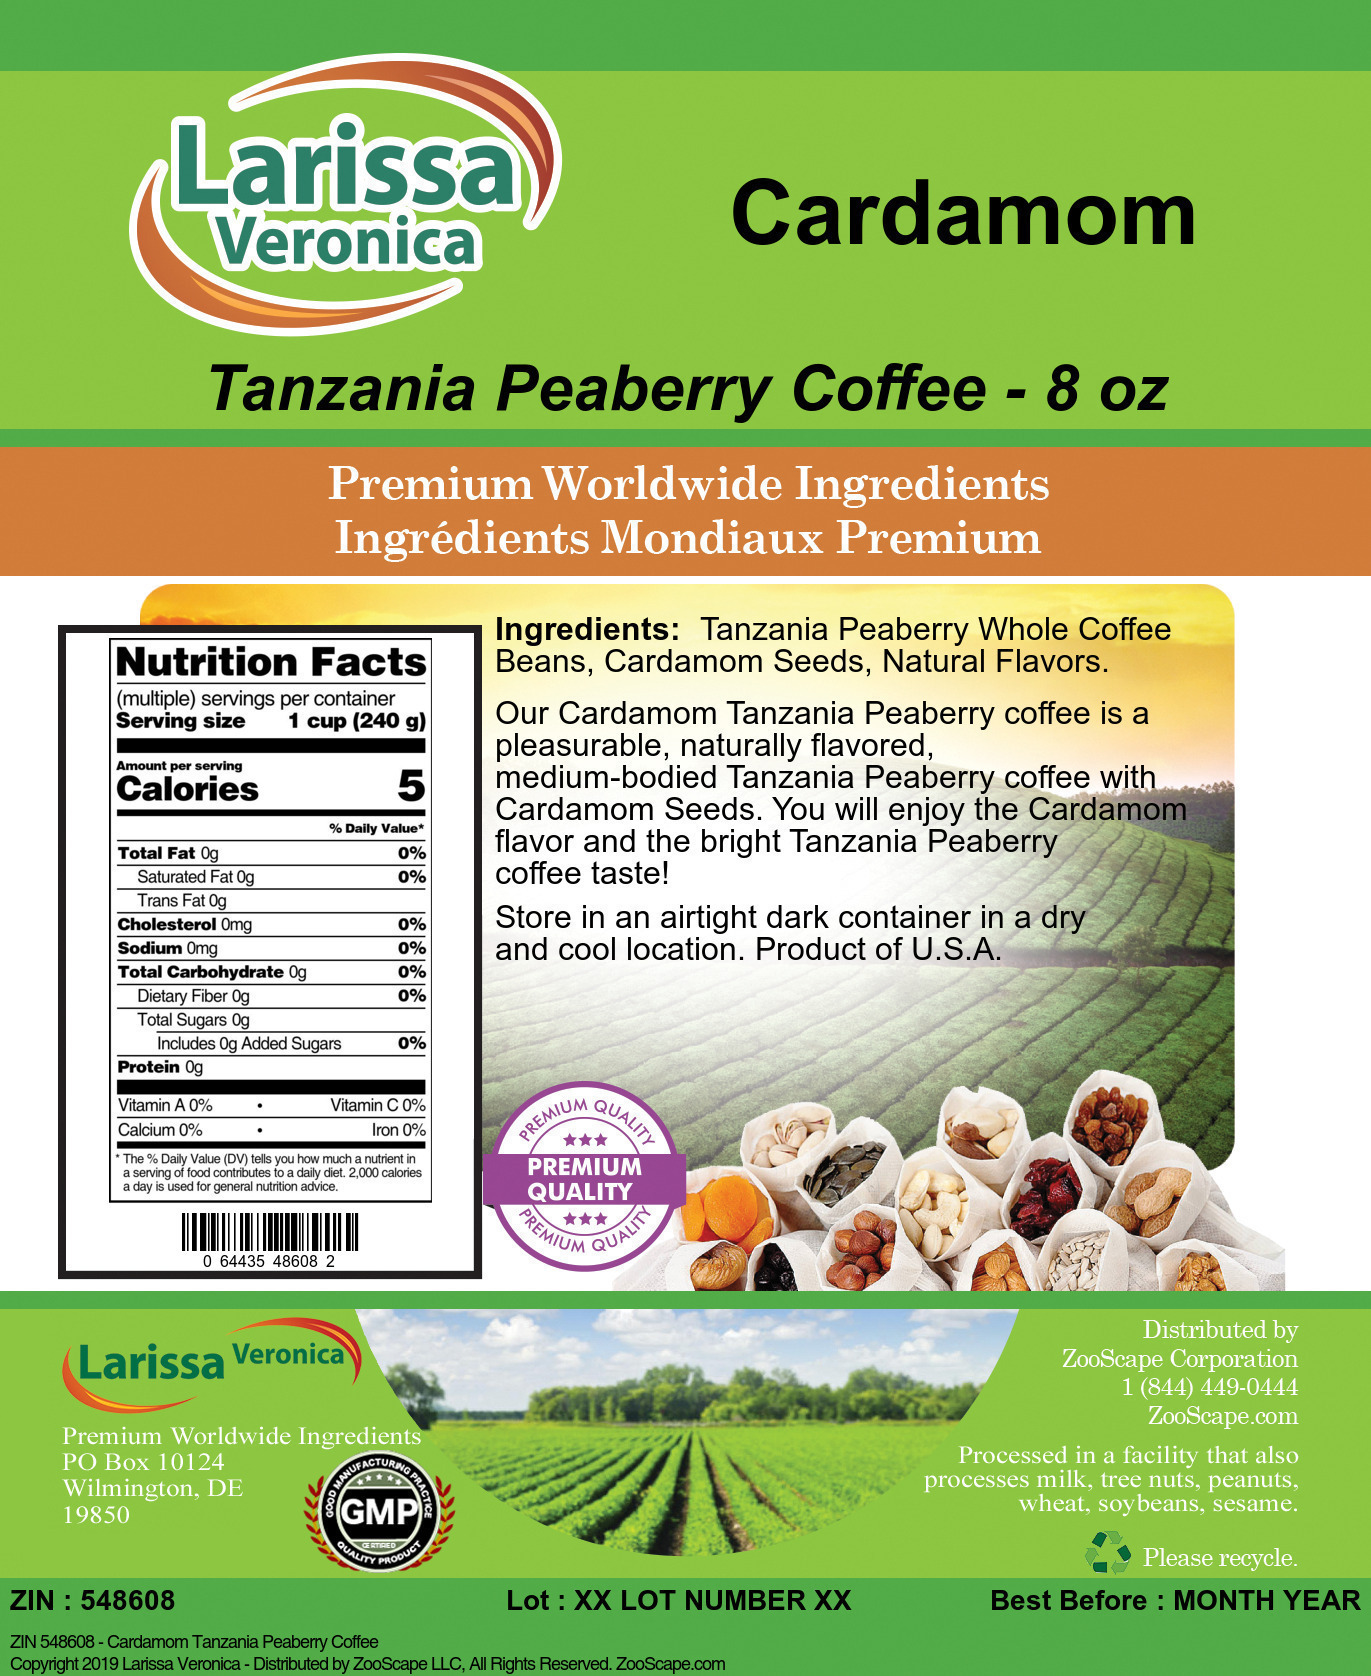 Cardamom Tanzania Peaberry Coffee - Label